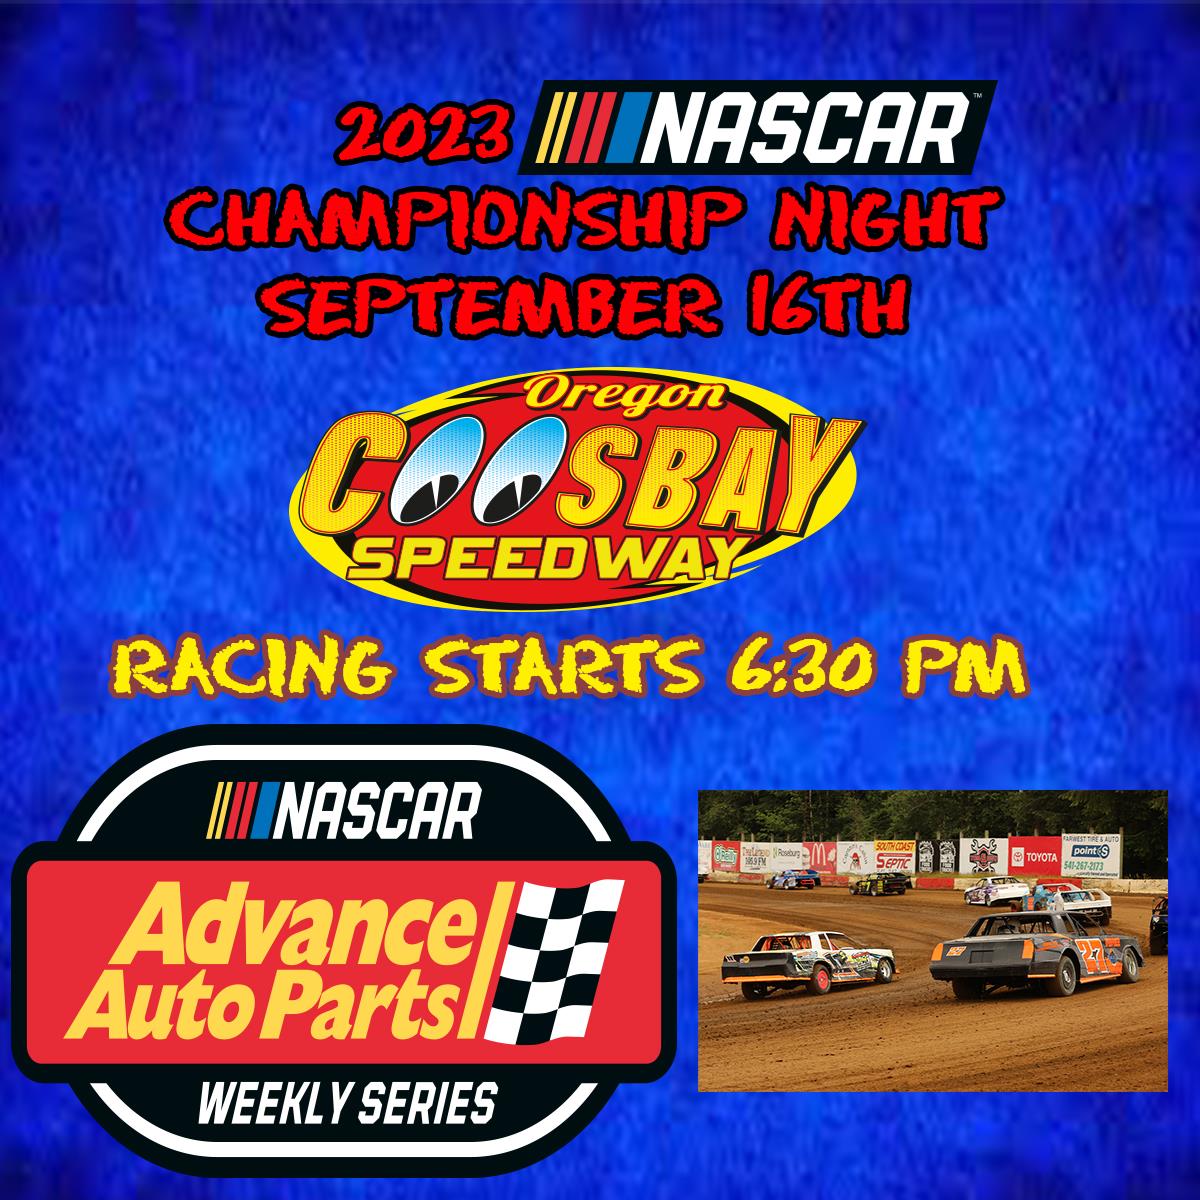 NASCAR Championship Night September 16